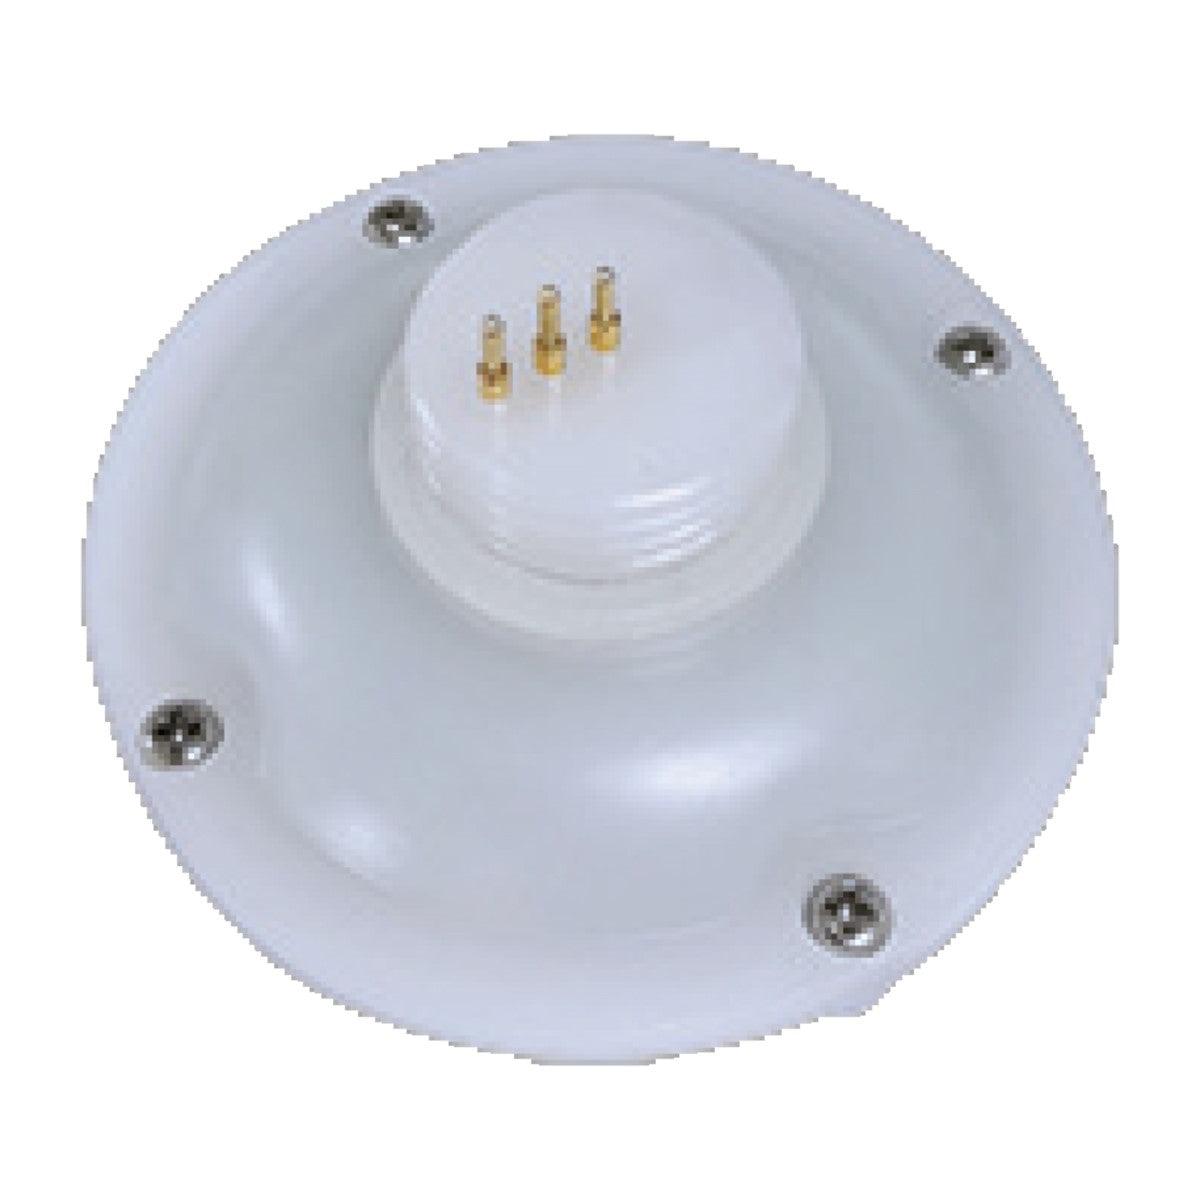 Keystone LED Microwave Occupancy/Daylight Sensor 12VDC Input Voltage 49ft Mounting Height - Bees Lighting